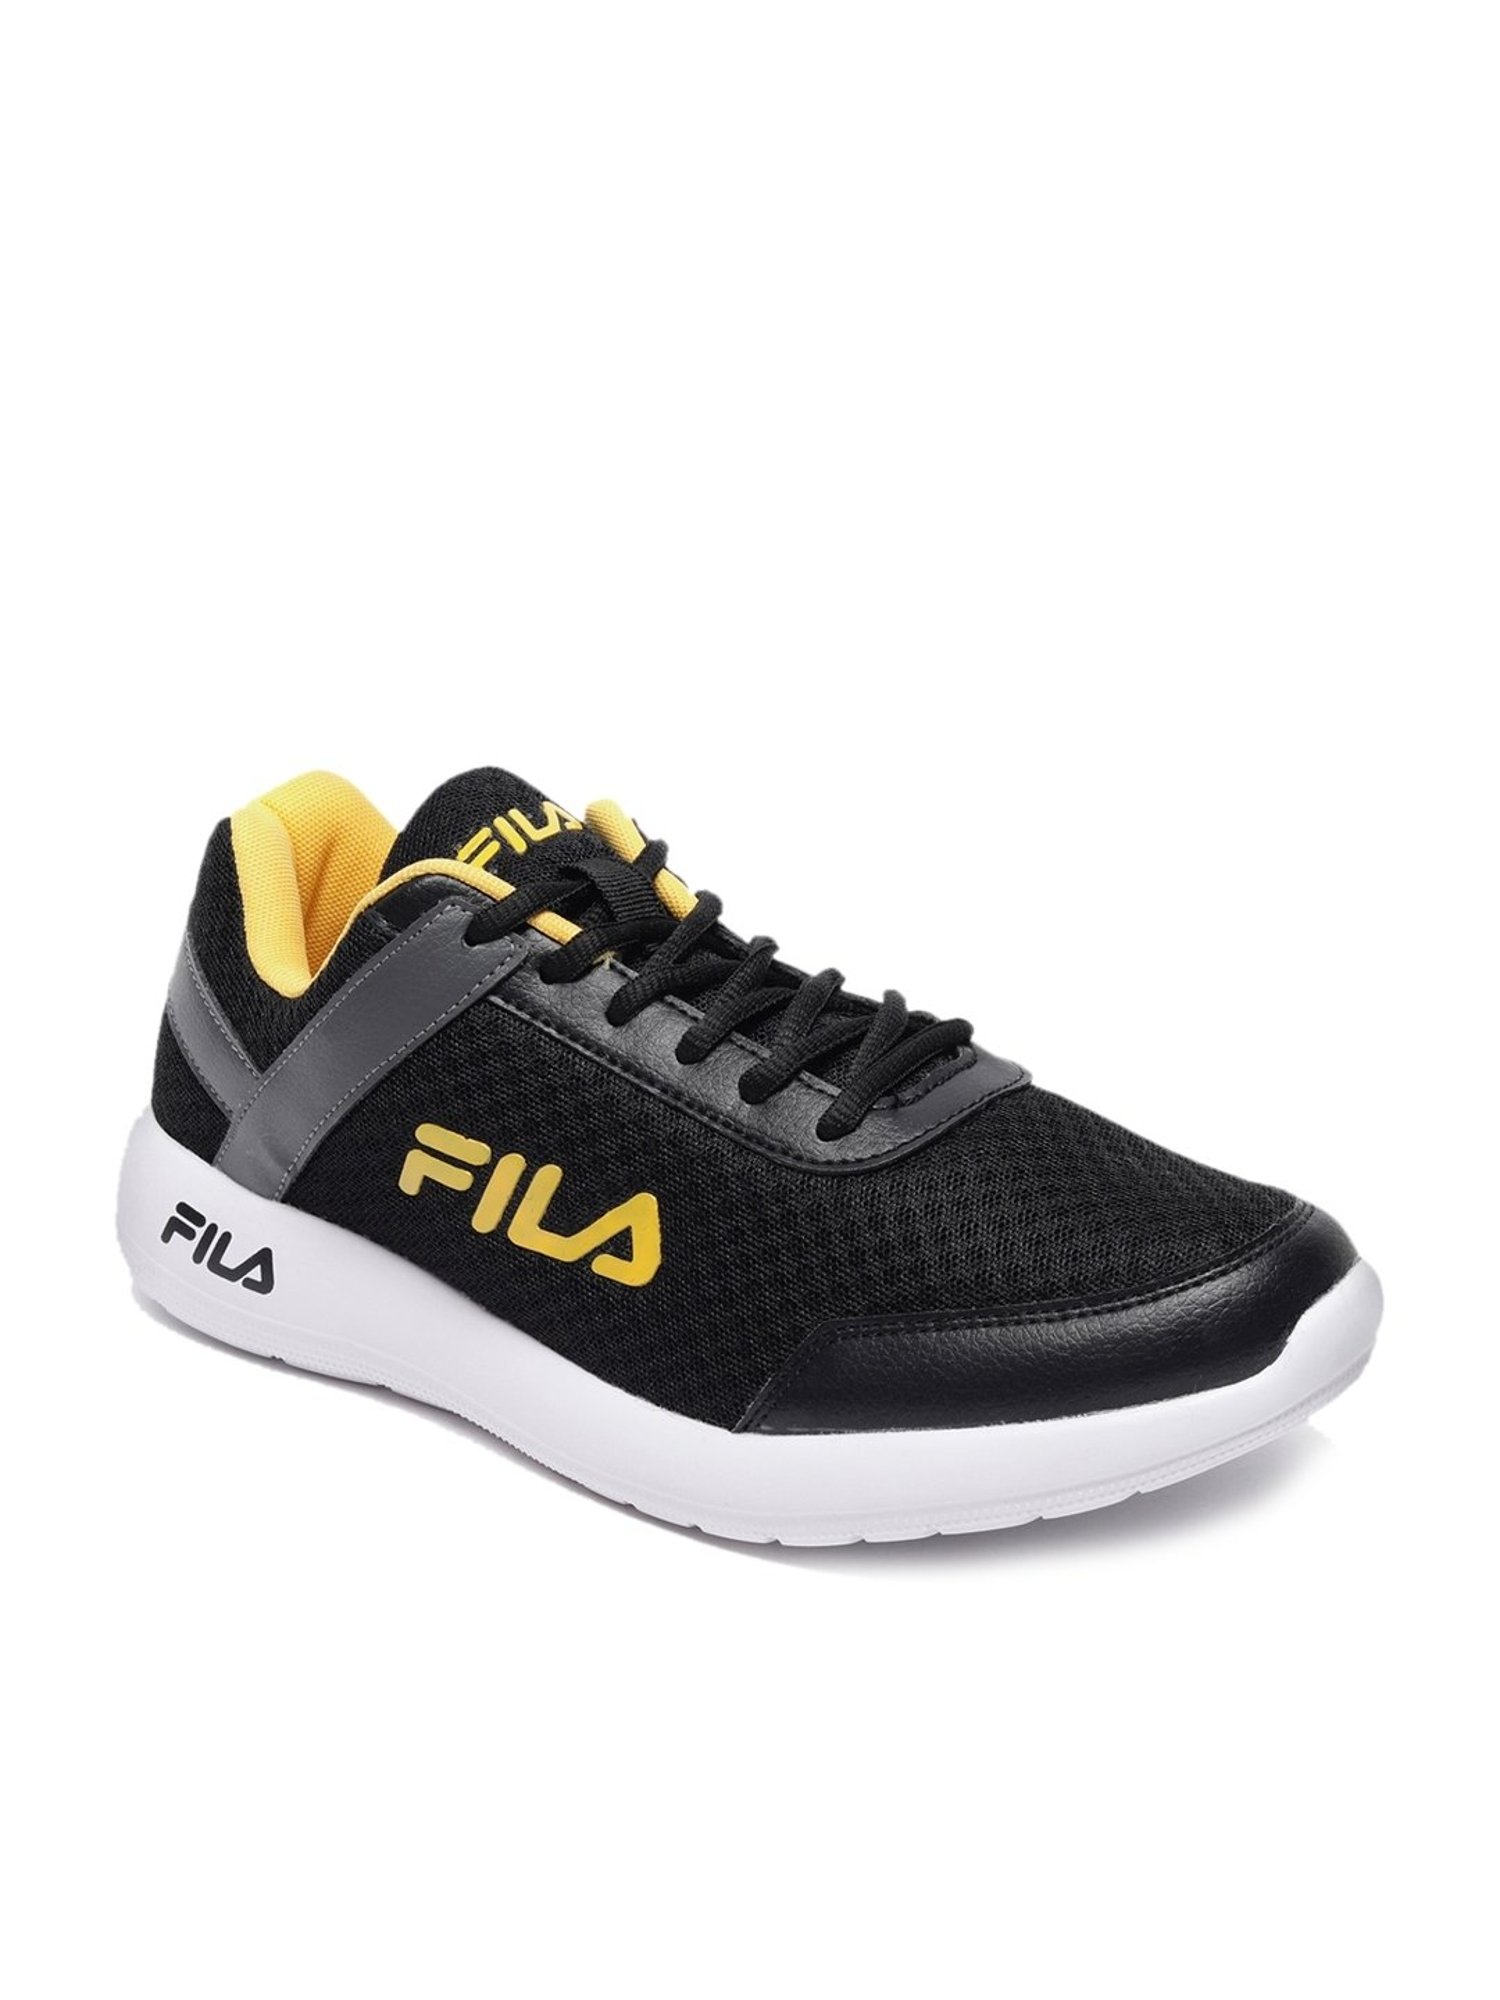 Fila Mens Workshift Running, Cross Training Shoes Black 13 Extra Wide (4E)  - Walmart.com